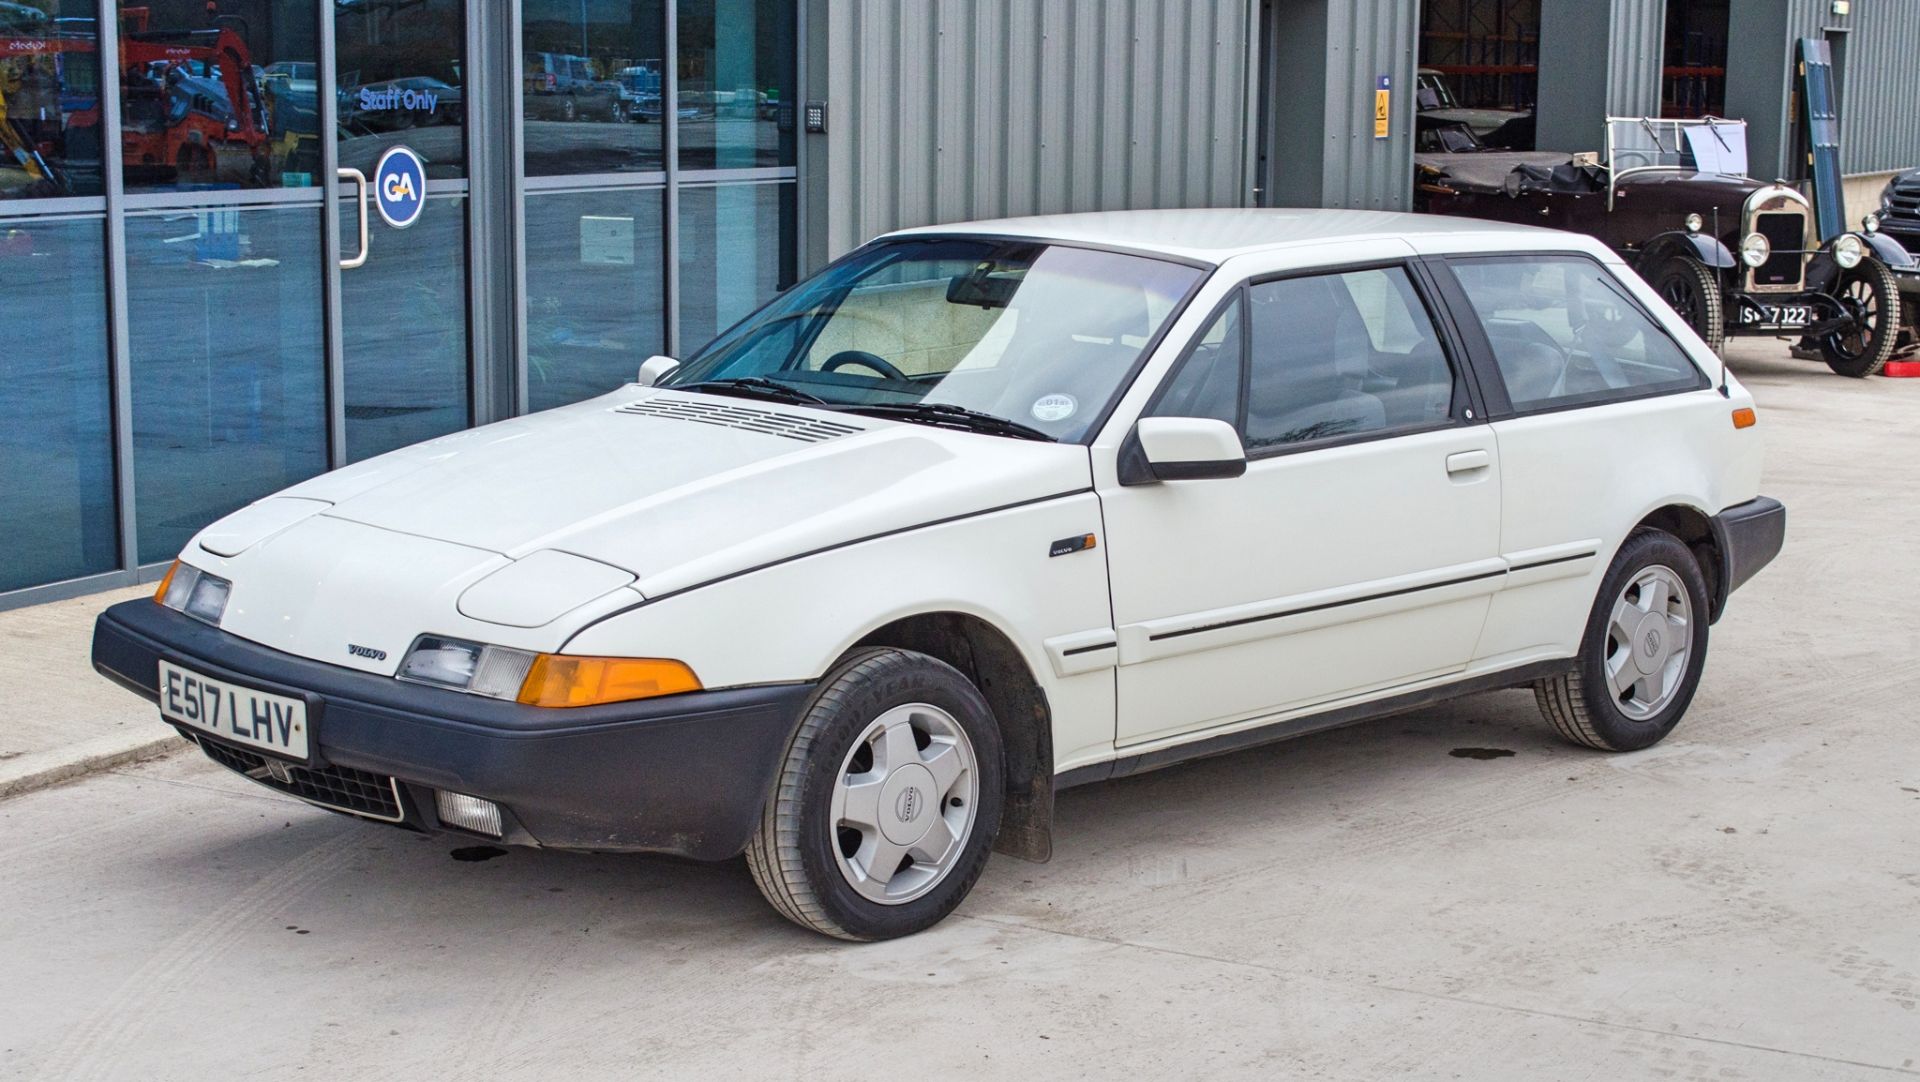 1987 Volvo 480 ES 1721CC 3 door hatchback Guide; £2,000 to £3,000  Registration: E517LHV Chassis: - Image 4 of 56